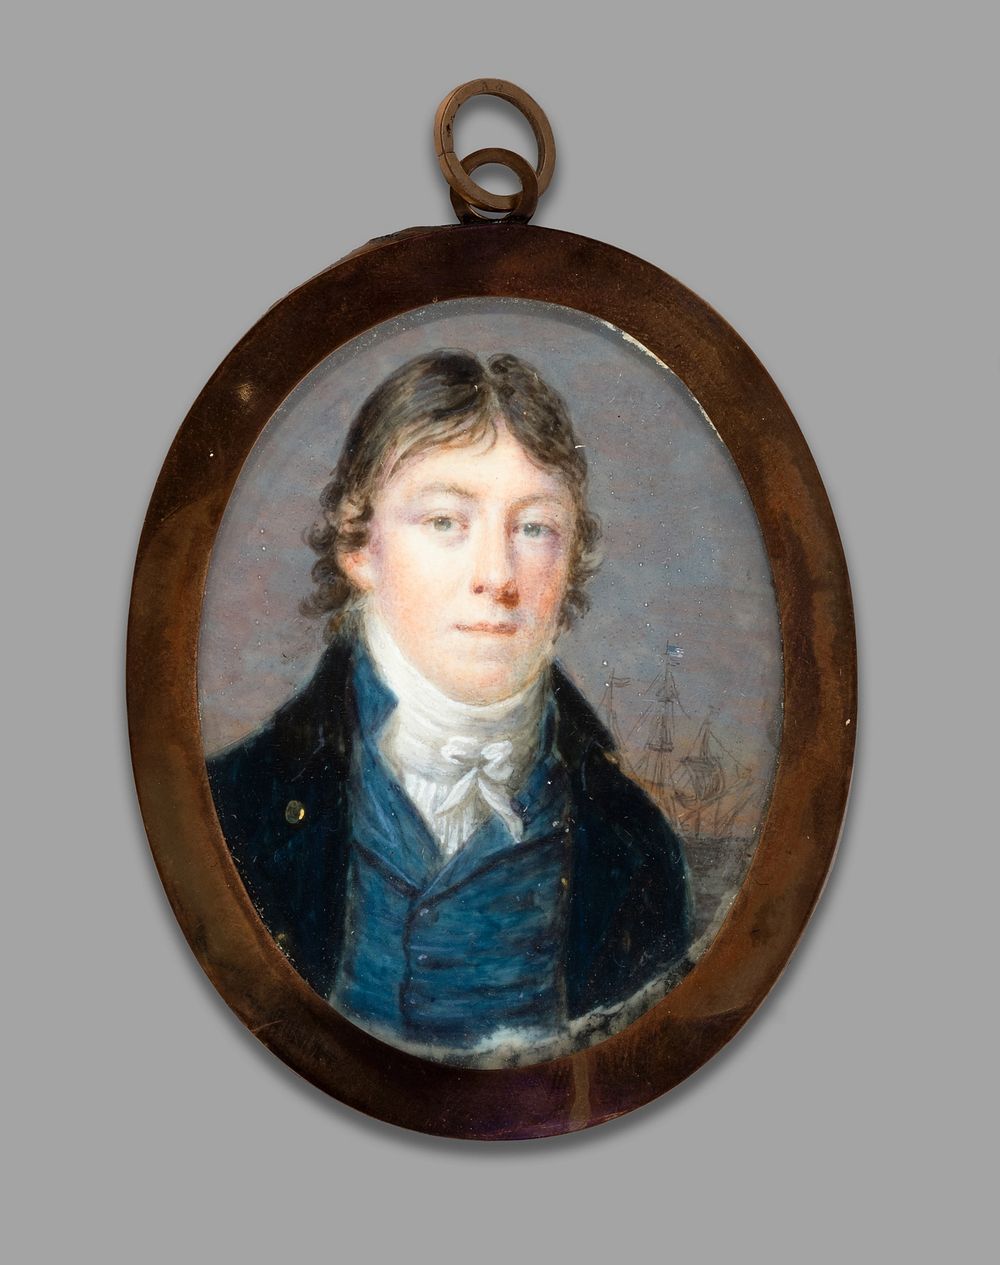 Portrait of Samuel Armitage by Thomas Birch